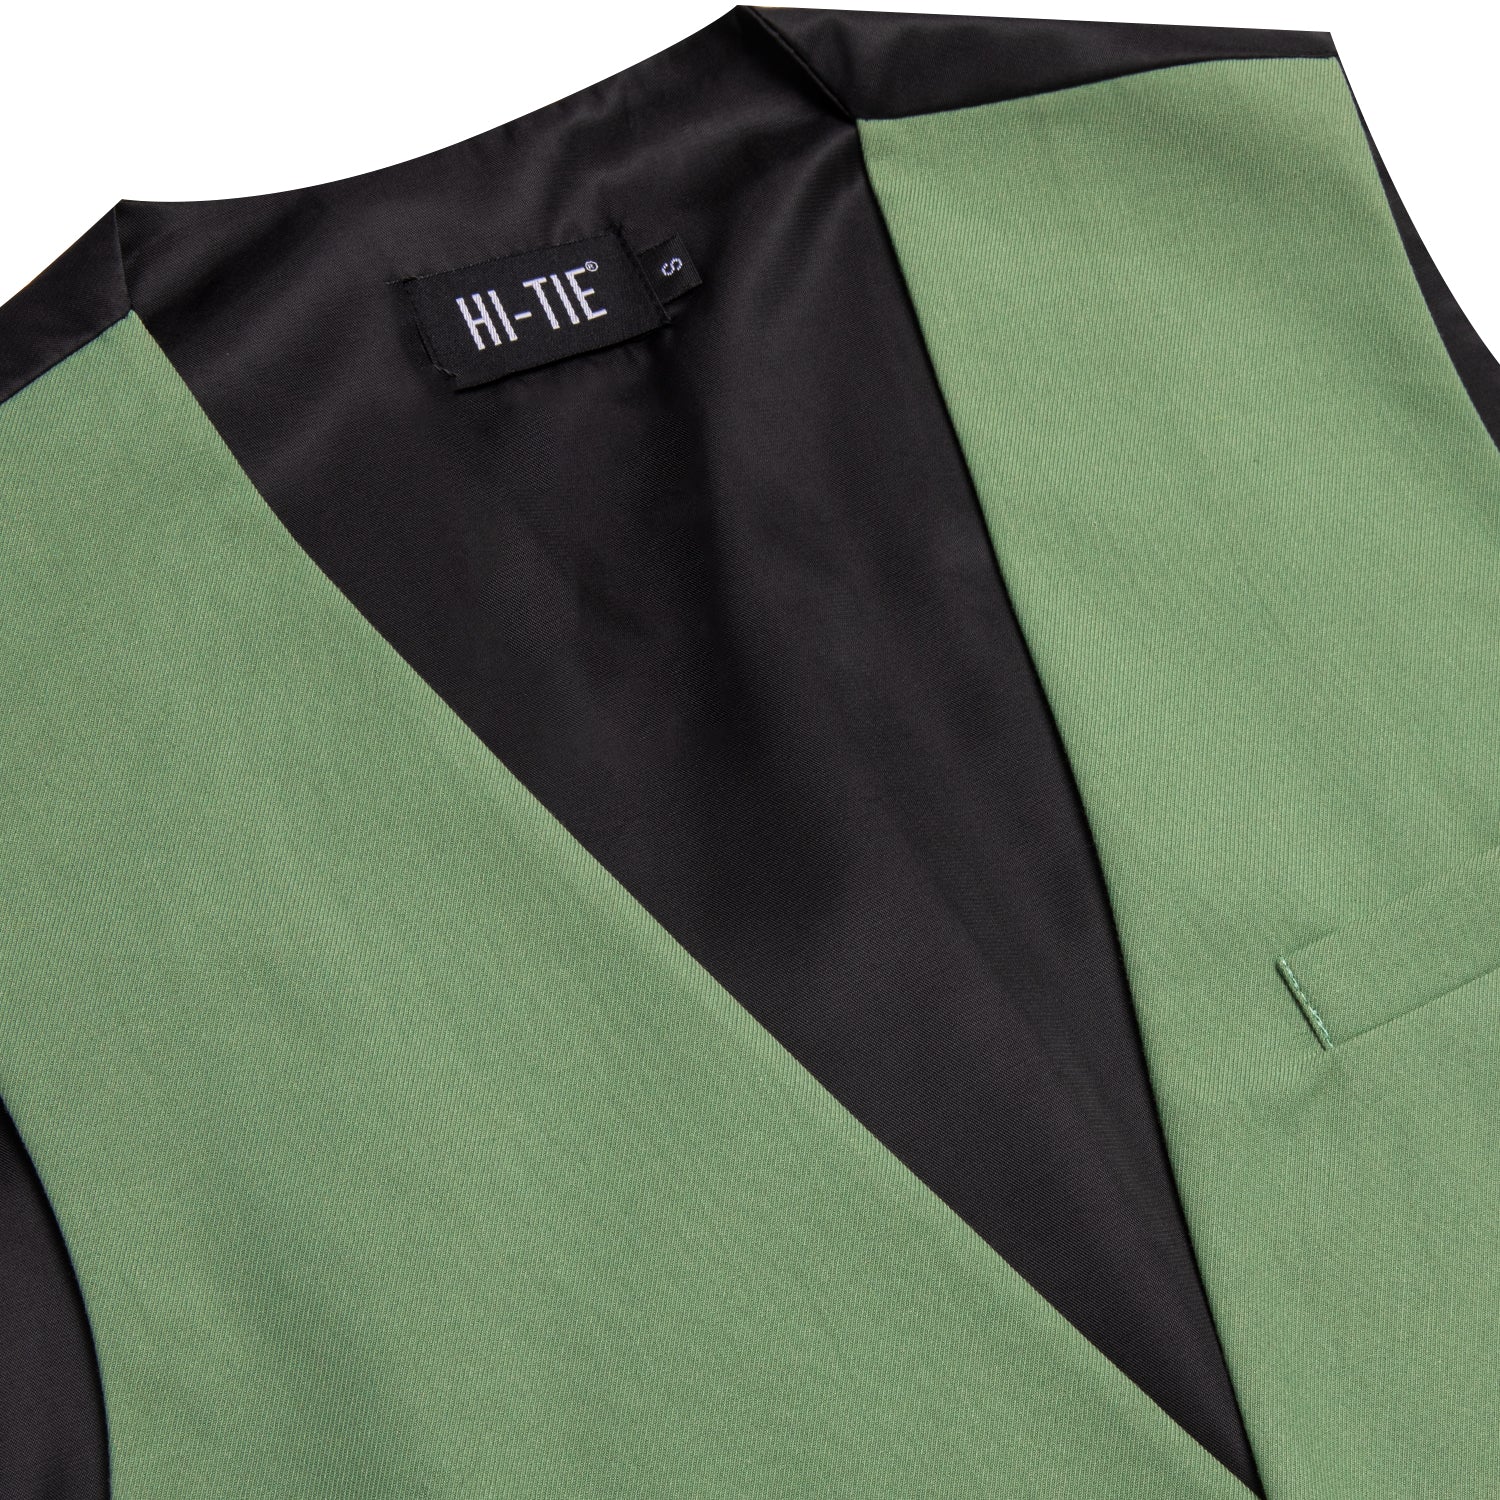 Spring Green Solid Silk Style Men's Single Vest